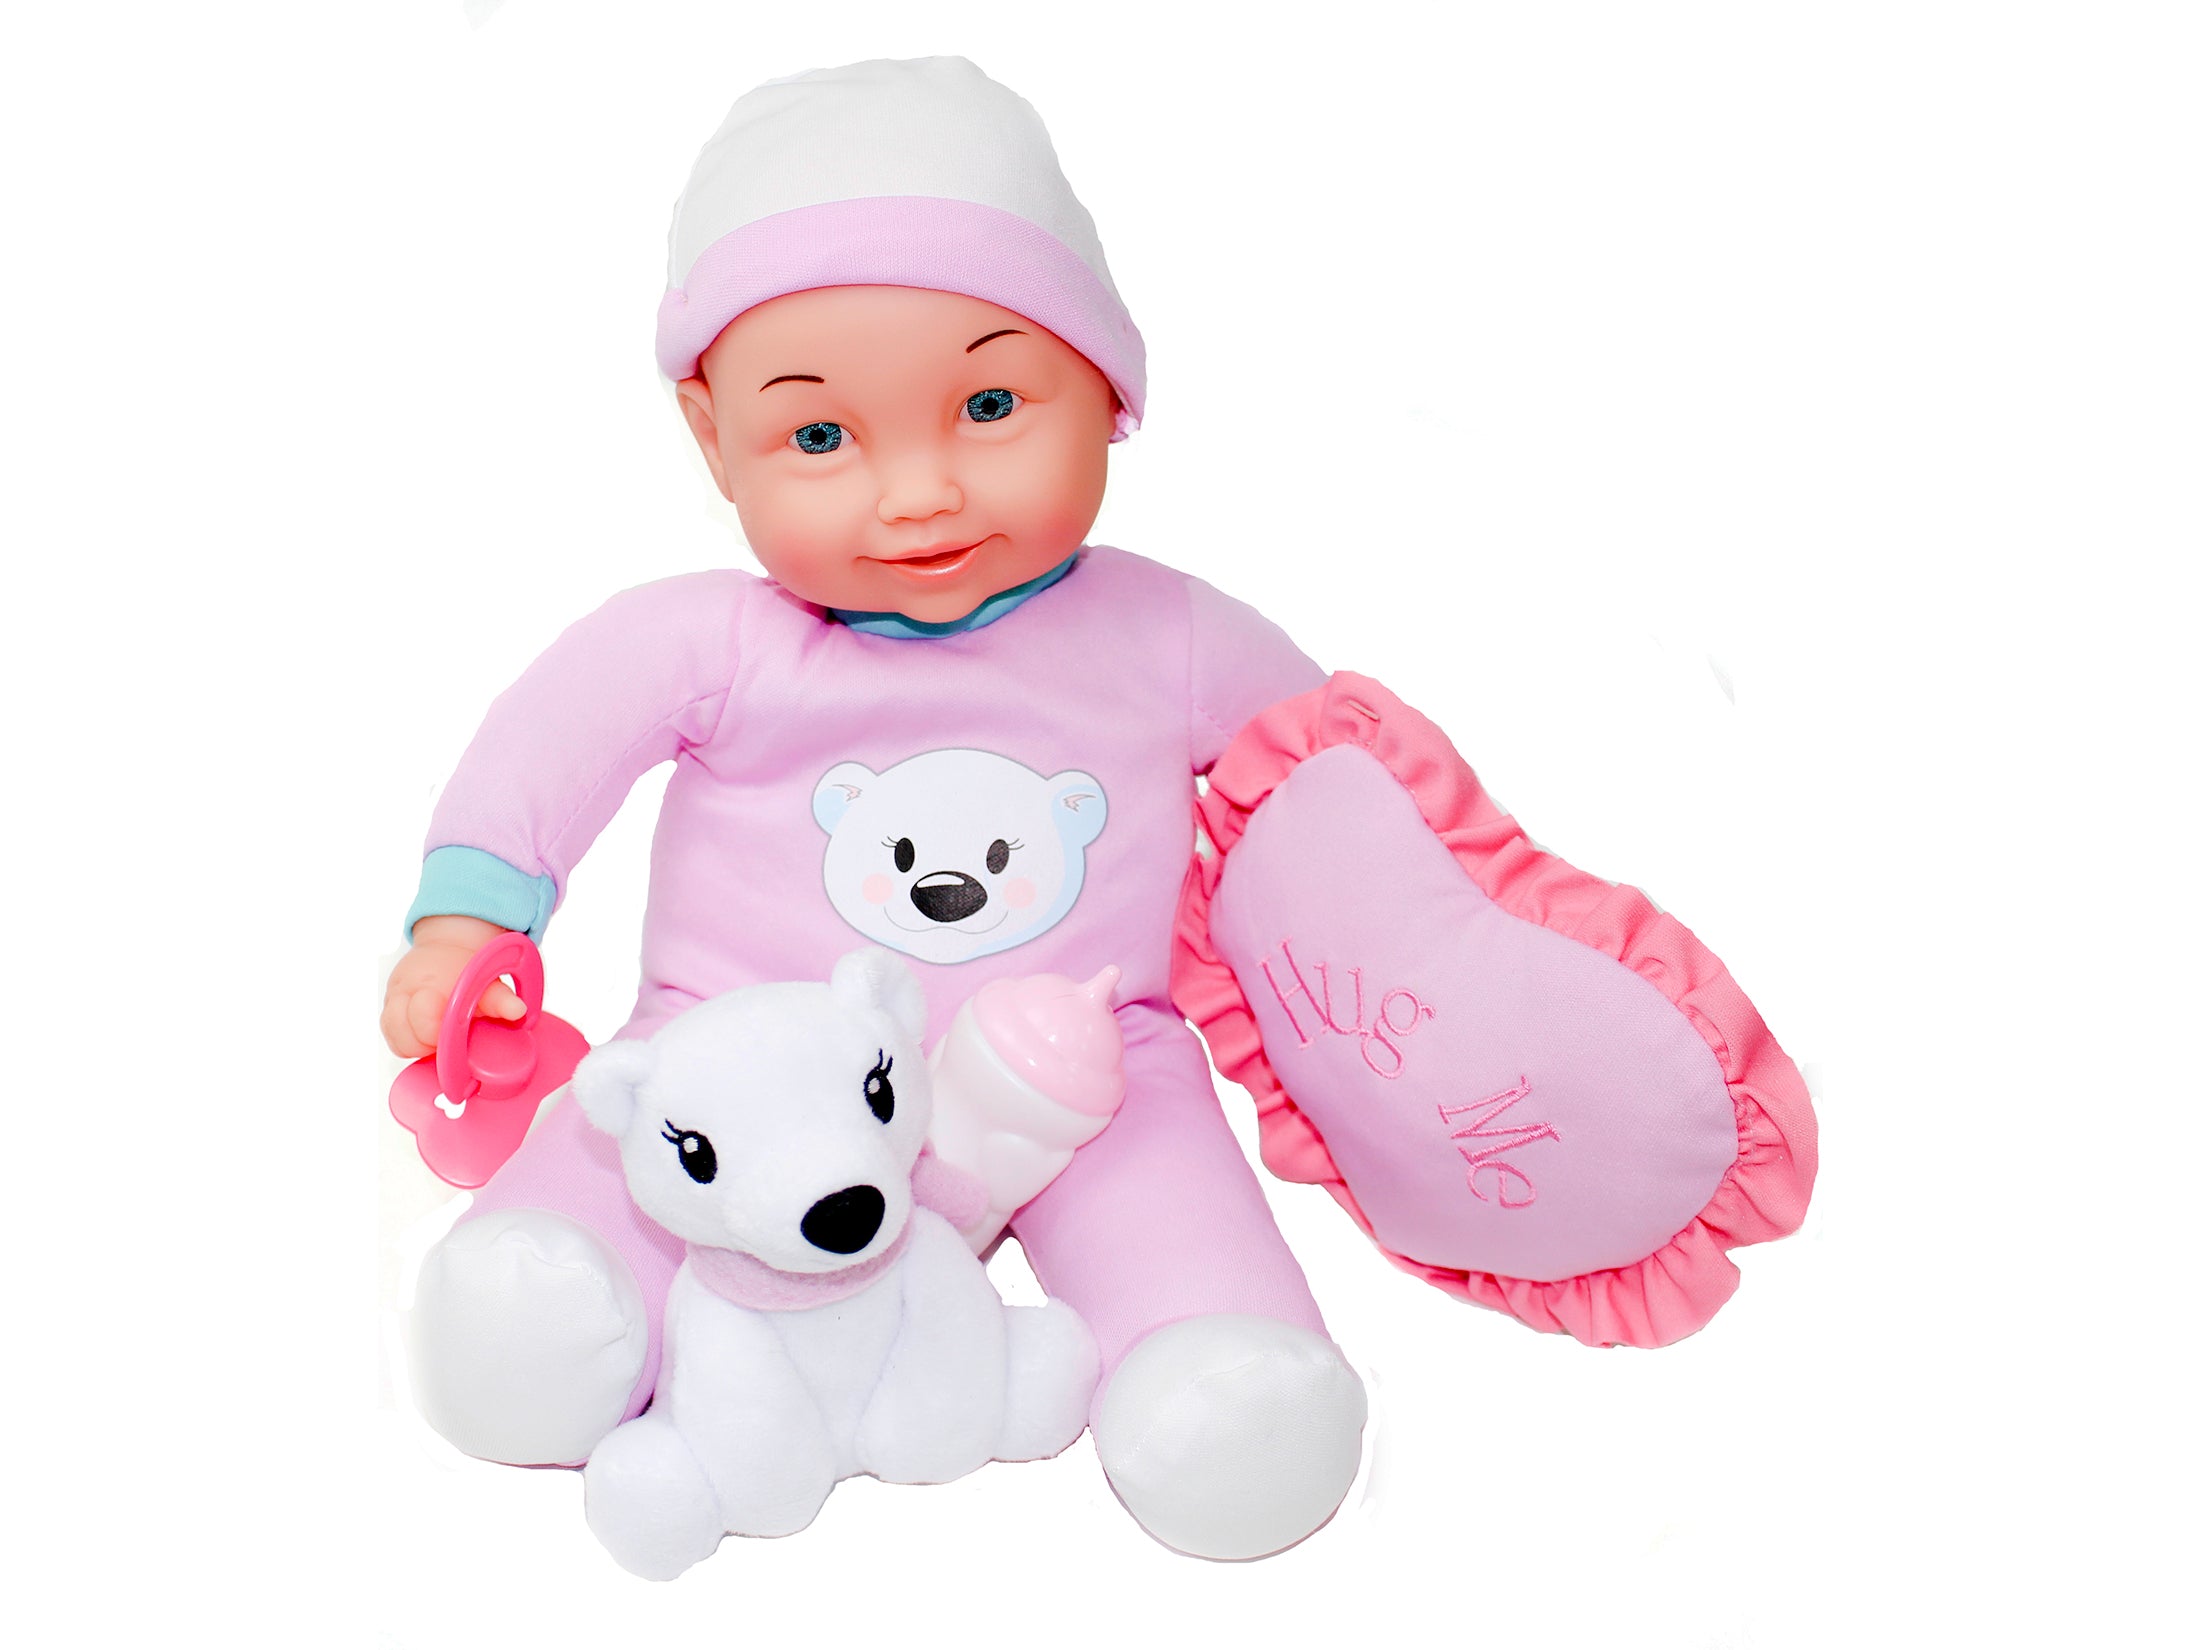 Stuffed Plush Baby Doll Samantha, 12 inches –